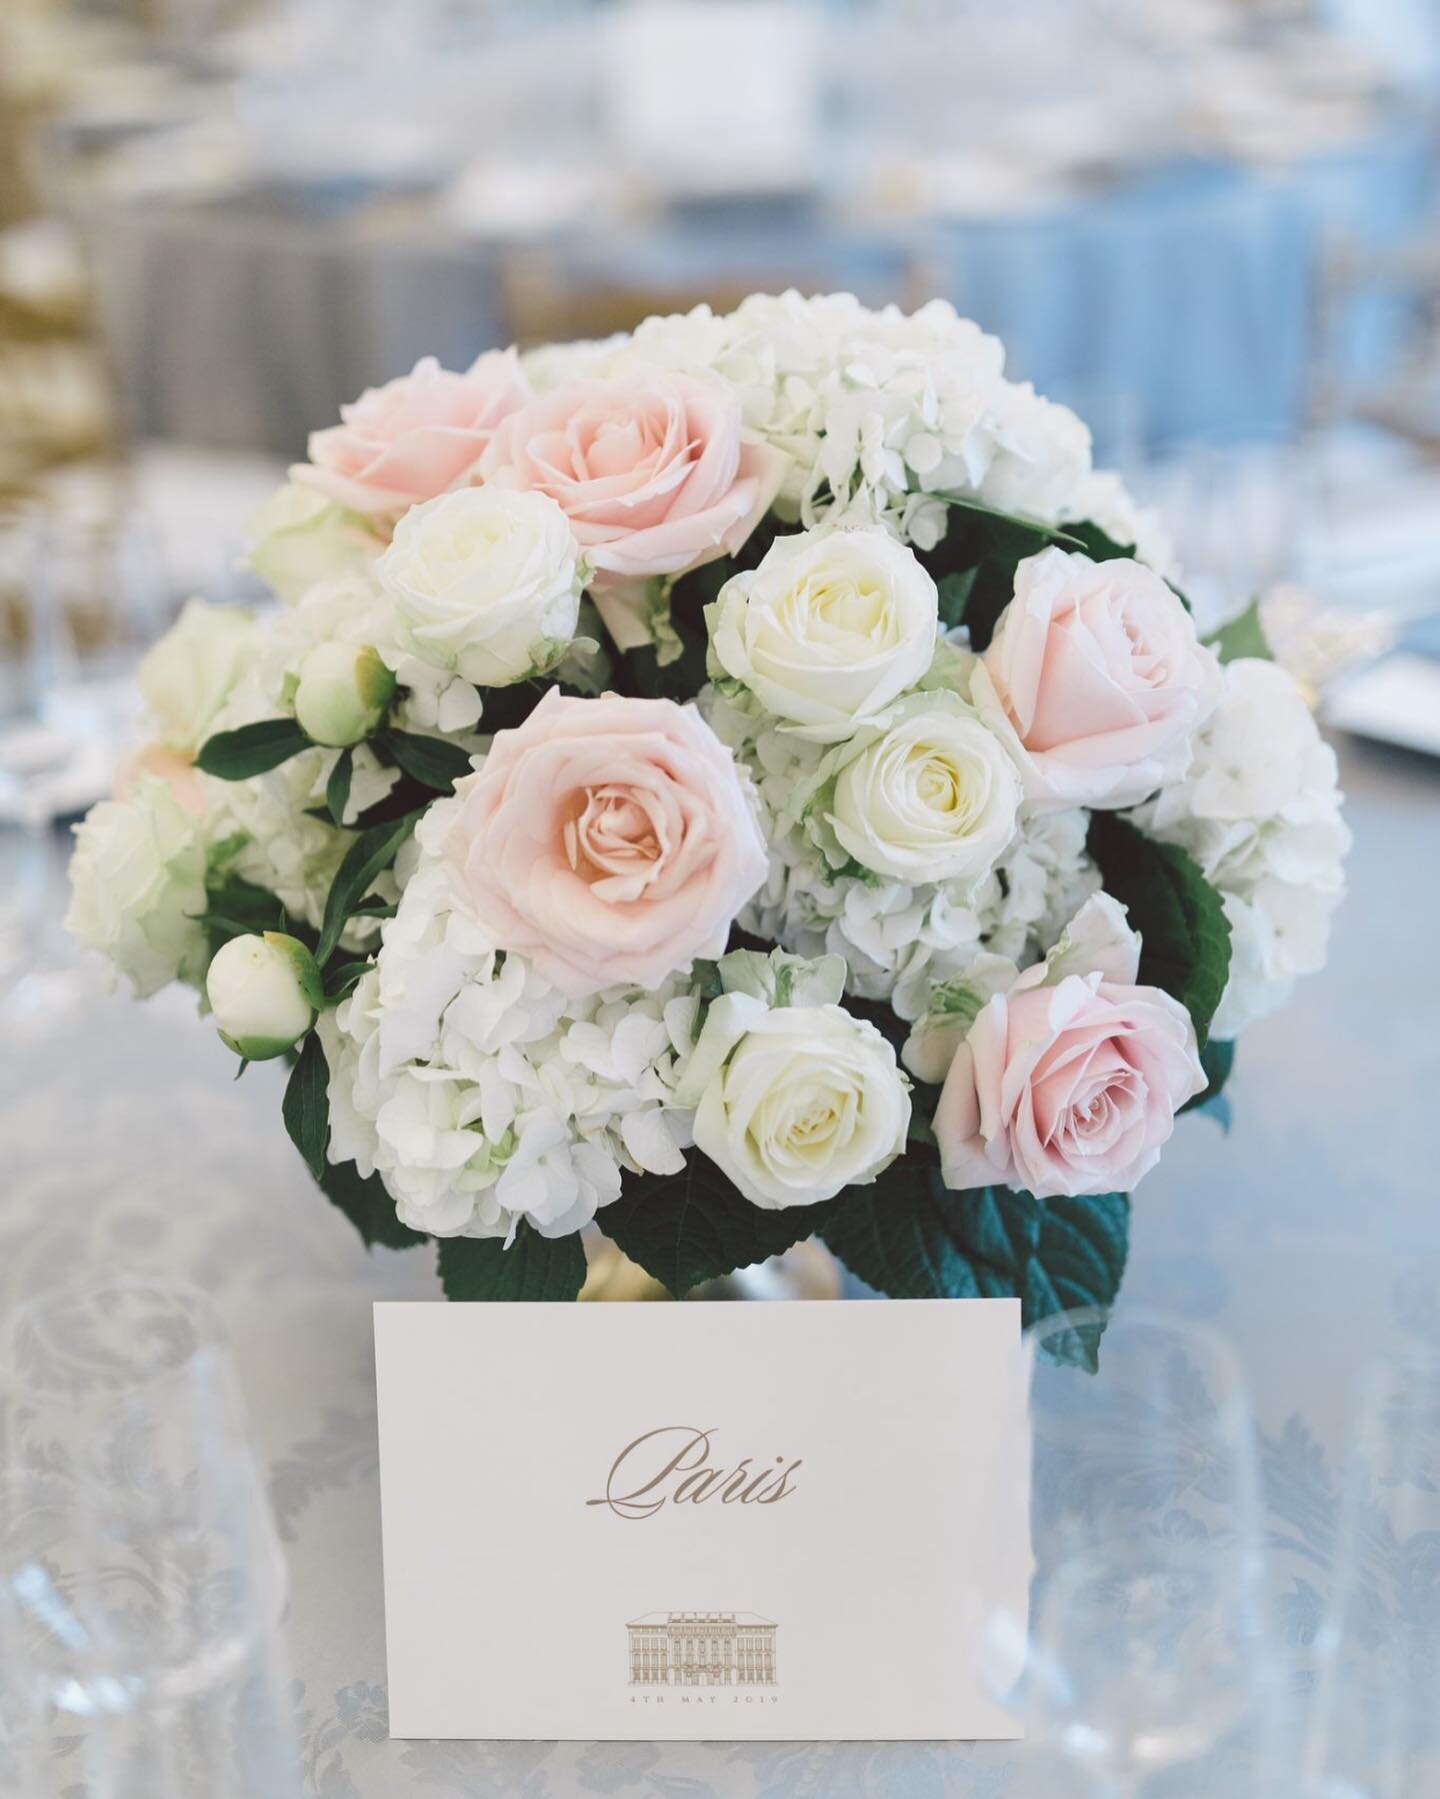 Table flowers and names 🌿💕
@atwistoflemonwedding 
@averybelovedbloom